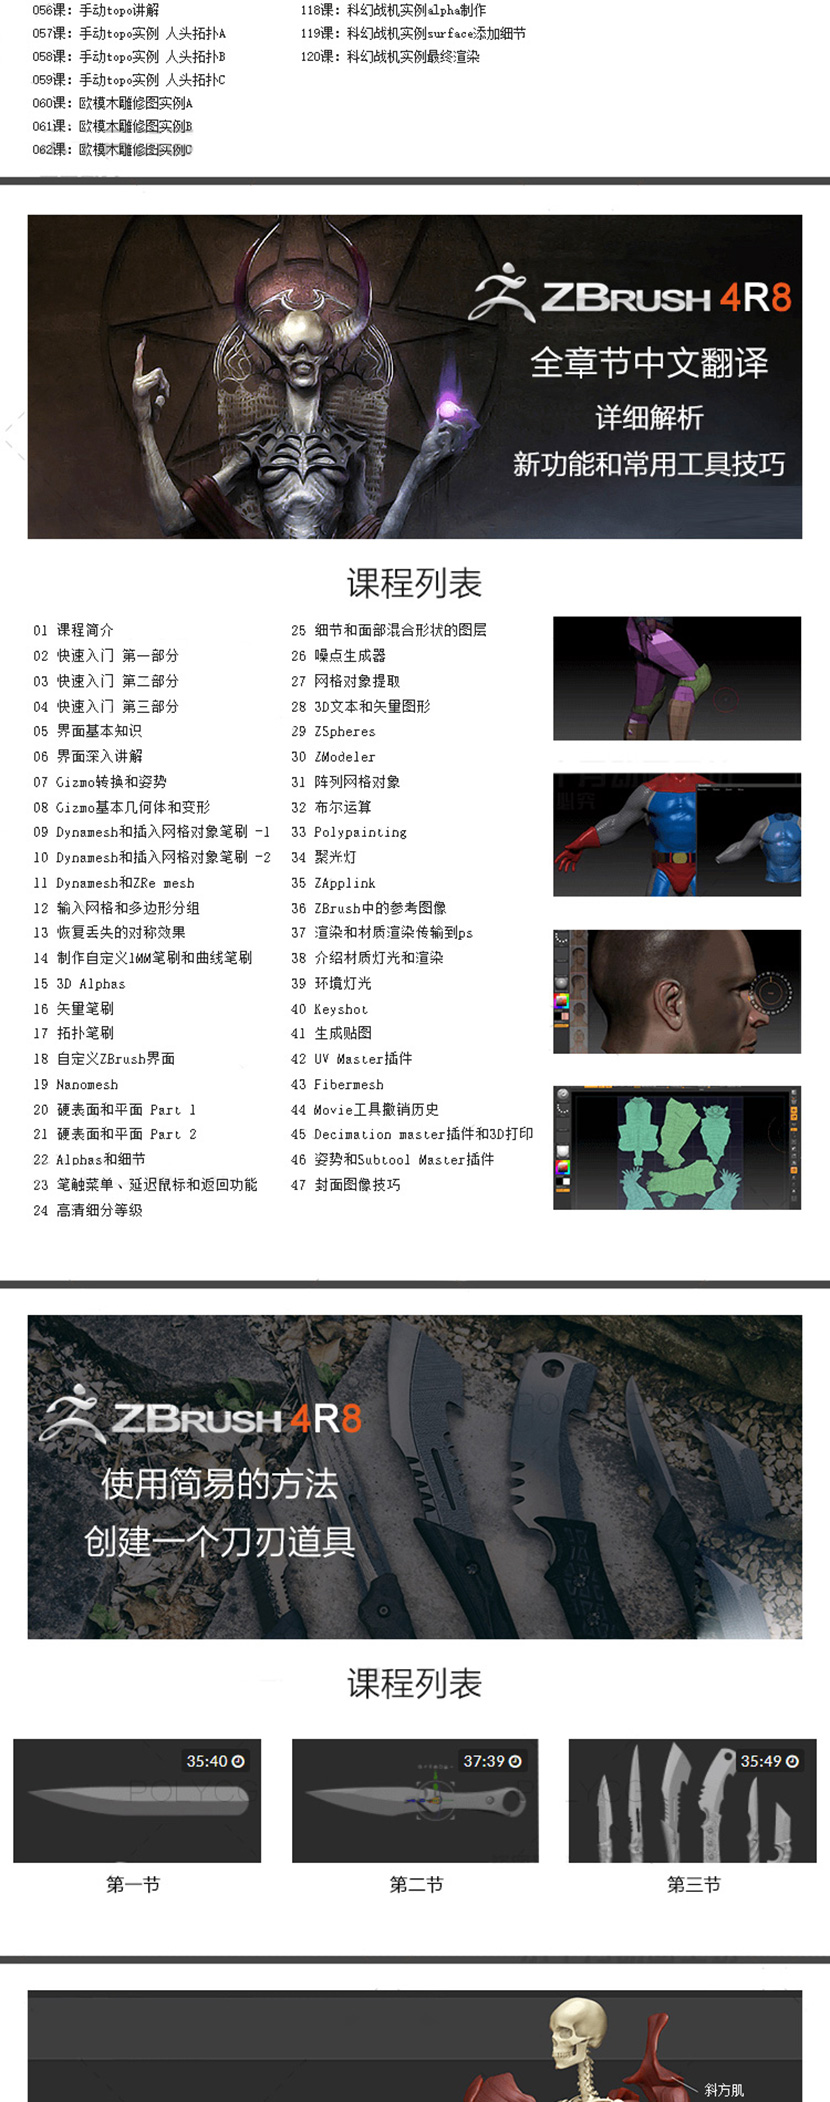 ZBrush教程新中文雕刻设计素材视频4r7 4r8 2019硬表面建模zb笔刷